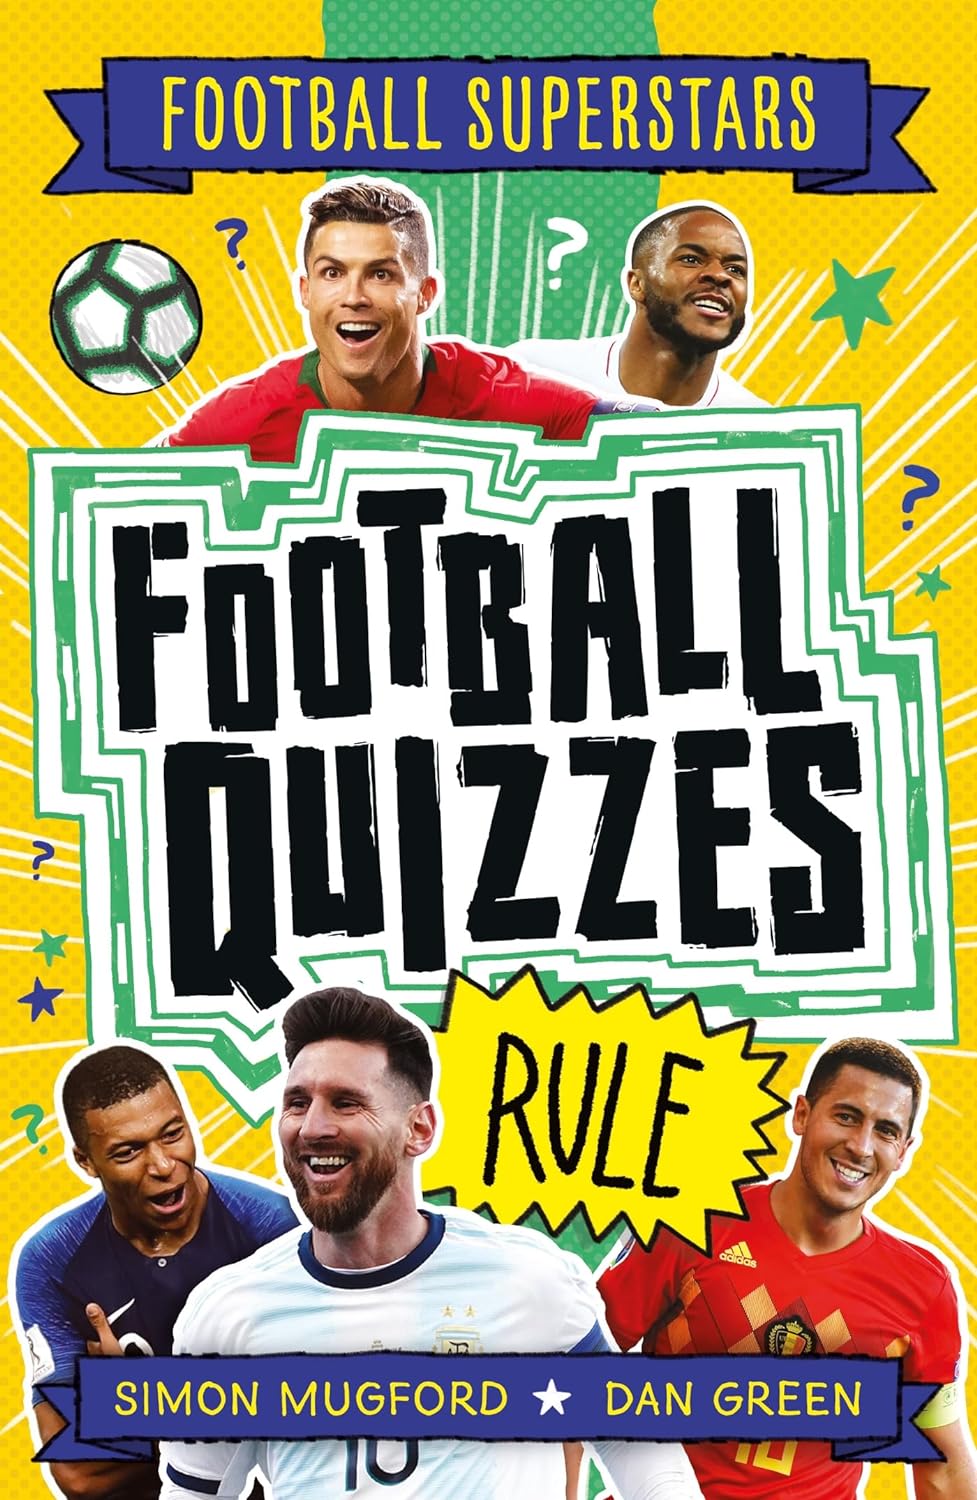 Football Superstars: Football Quizzes Rules